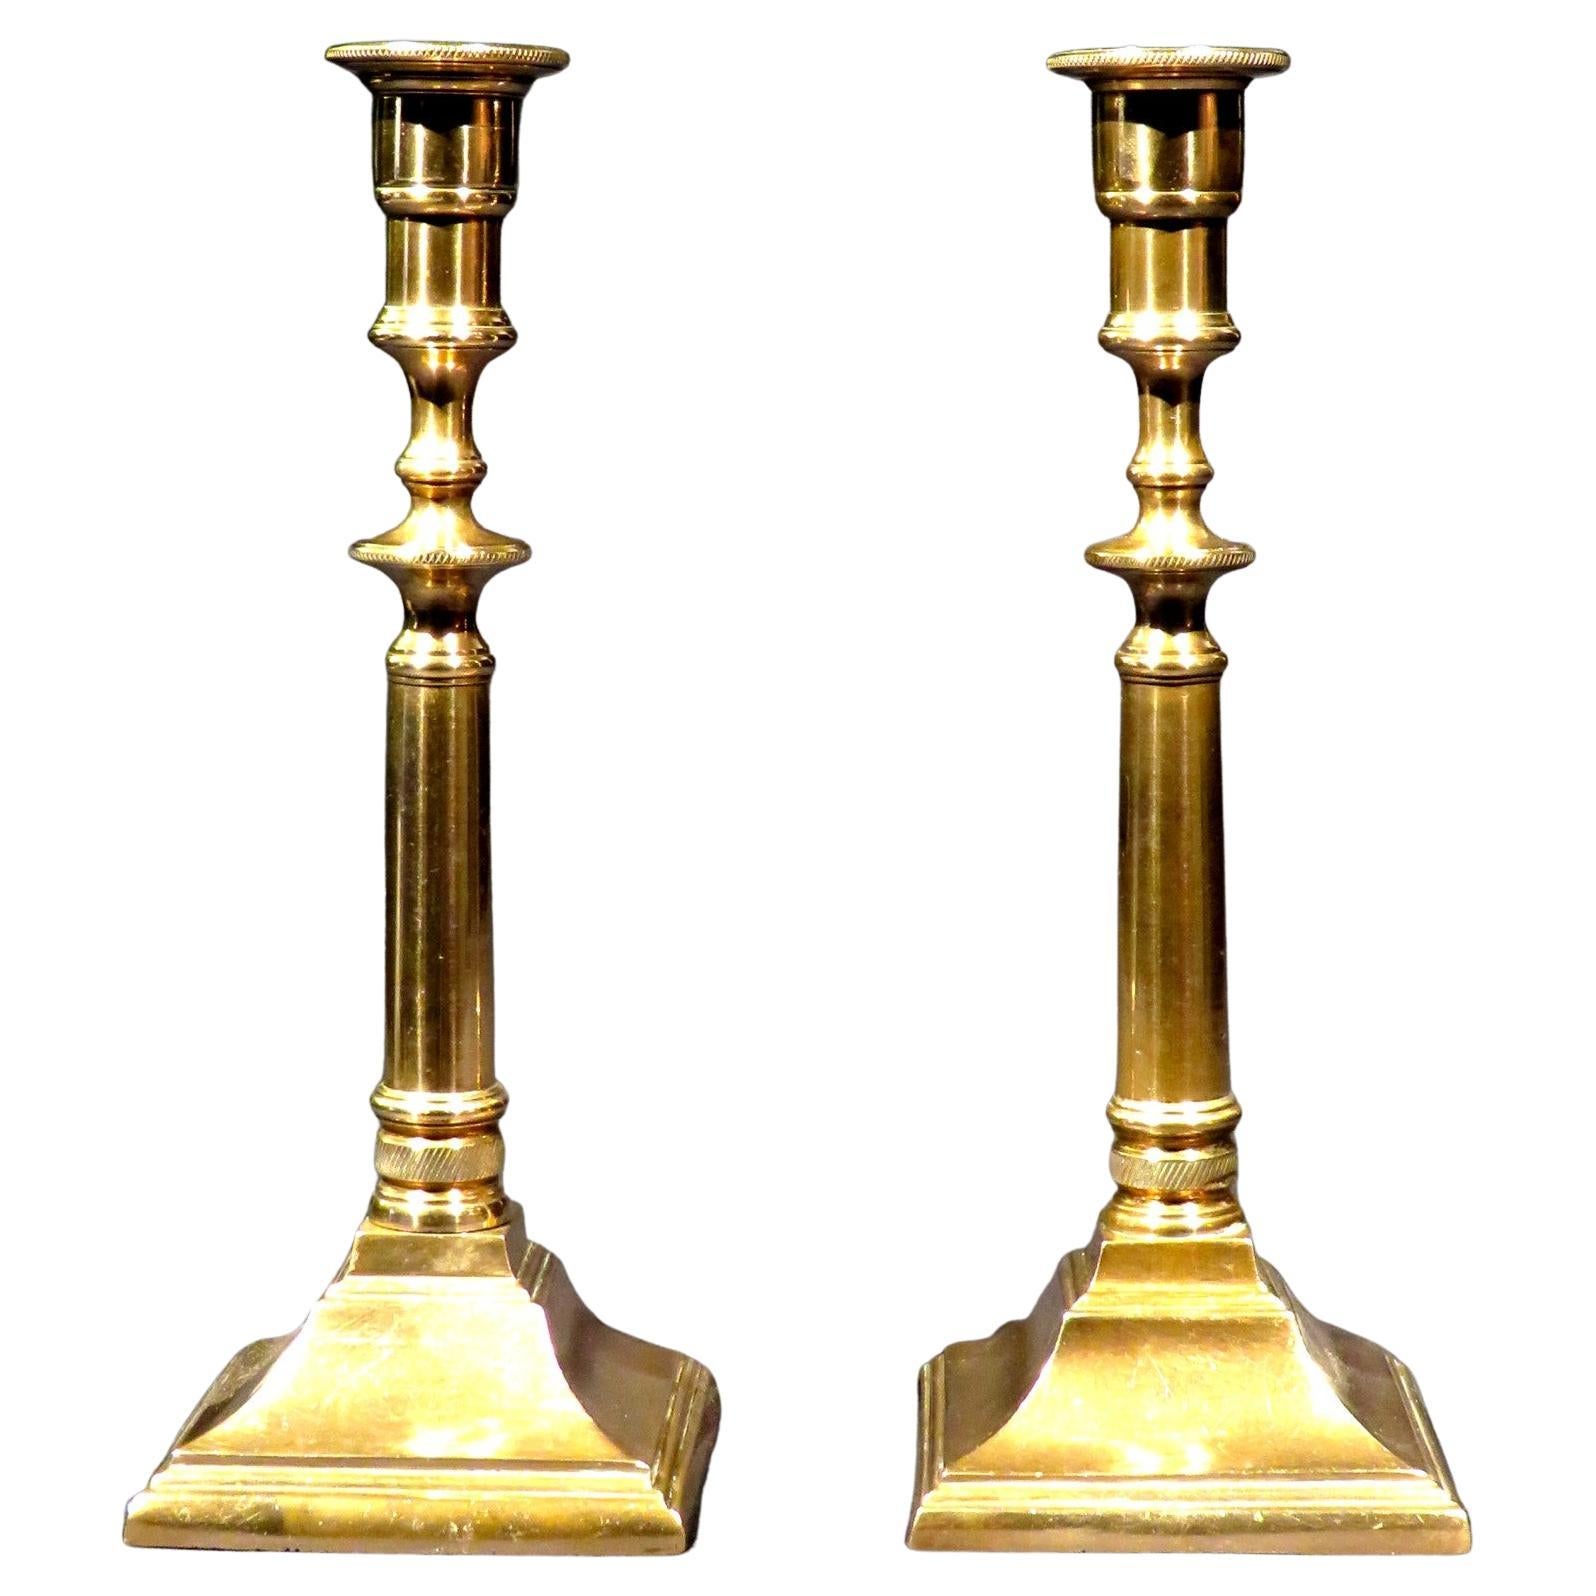 Seltenes Paar georgianischer Glockenleuchter aus Metallguss, Kampagnen-Kerzenständer, England um 1770